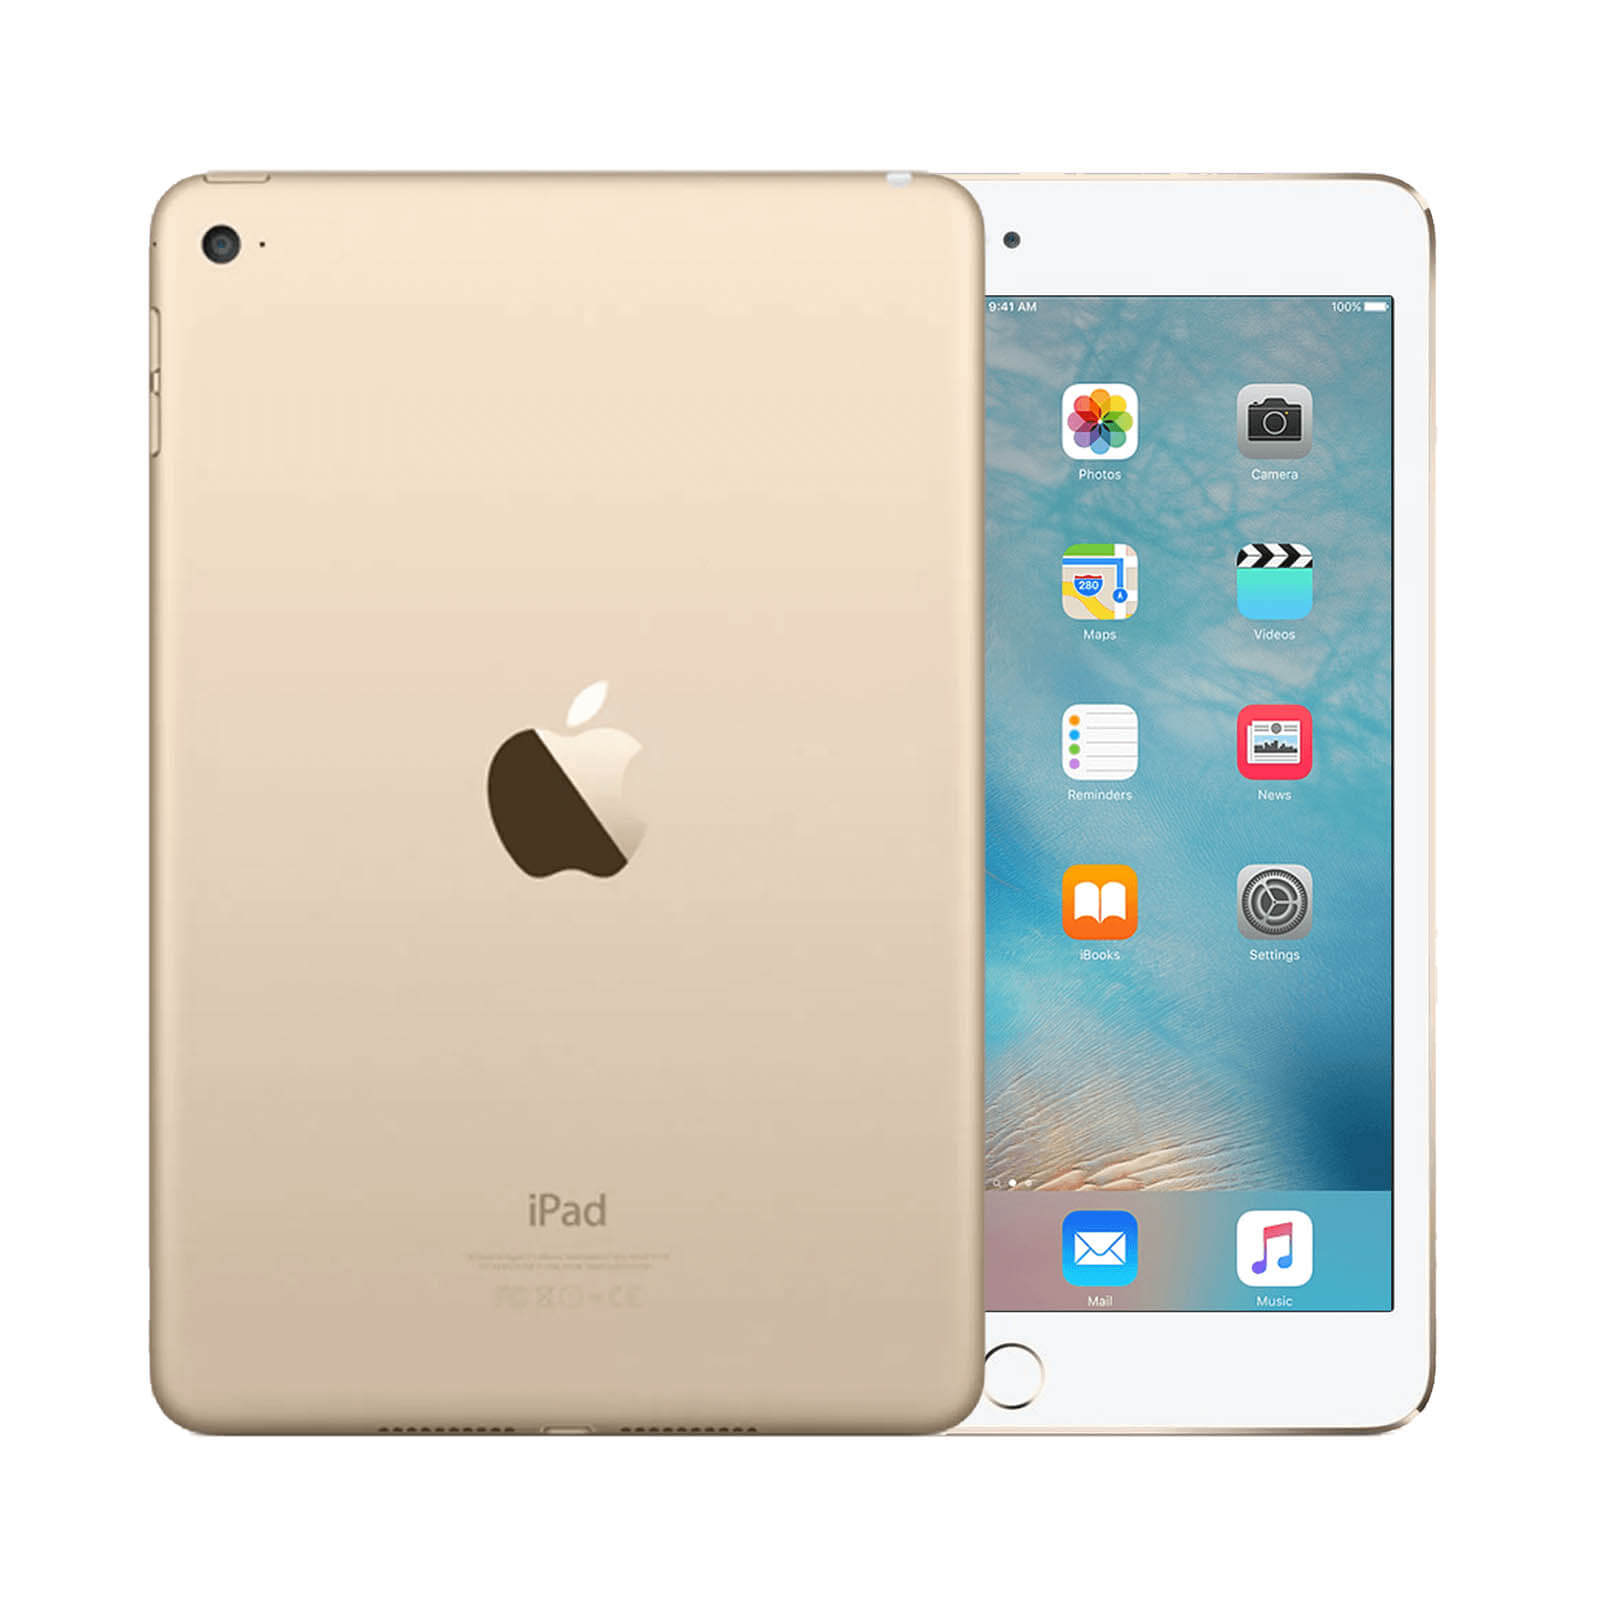 Apple iPad Mini 4 16GB Gold WiFi - Pristine 16GB Gold Pristine